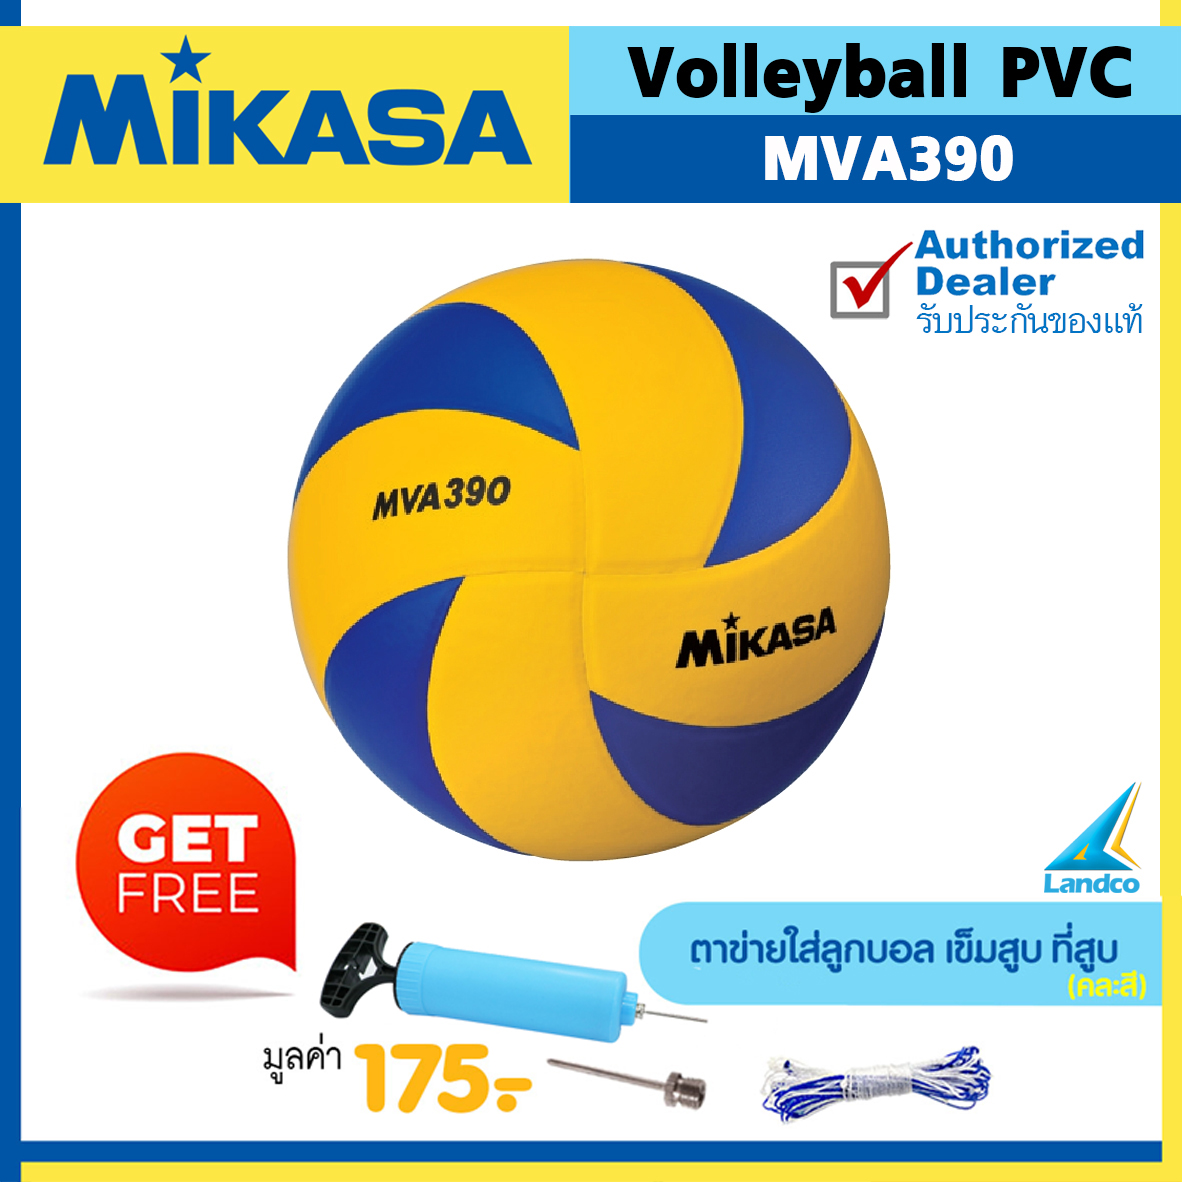 MIKASA ลูกวอลเลย์บอลหนัง Volleyball PVC #5 th MVA390 (545) (แถมฟรี ตาข่ายใส่ลูกบอล + เข็มสูบ + ที่สูบลมมือ SPL)